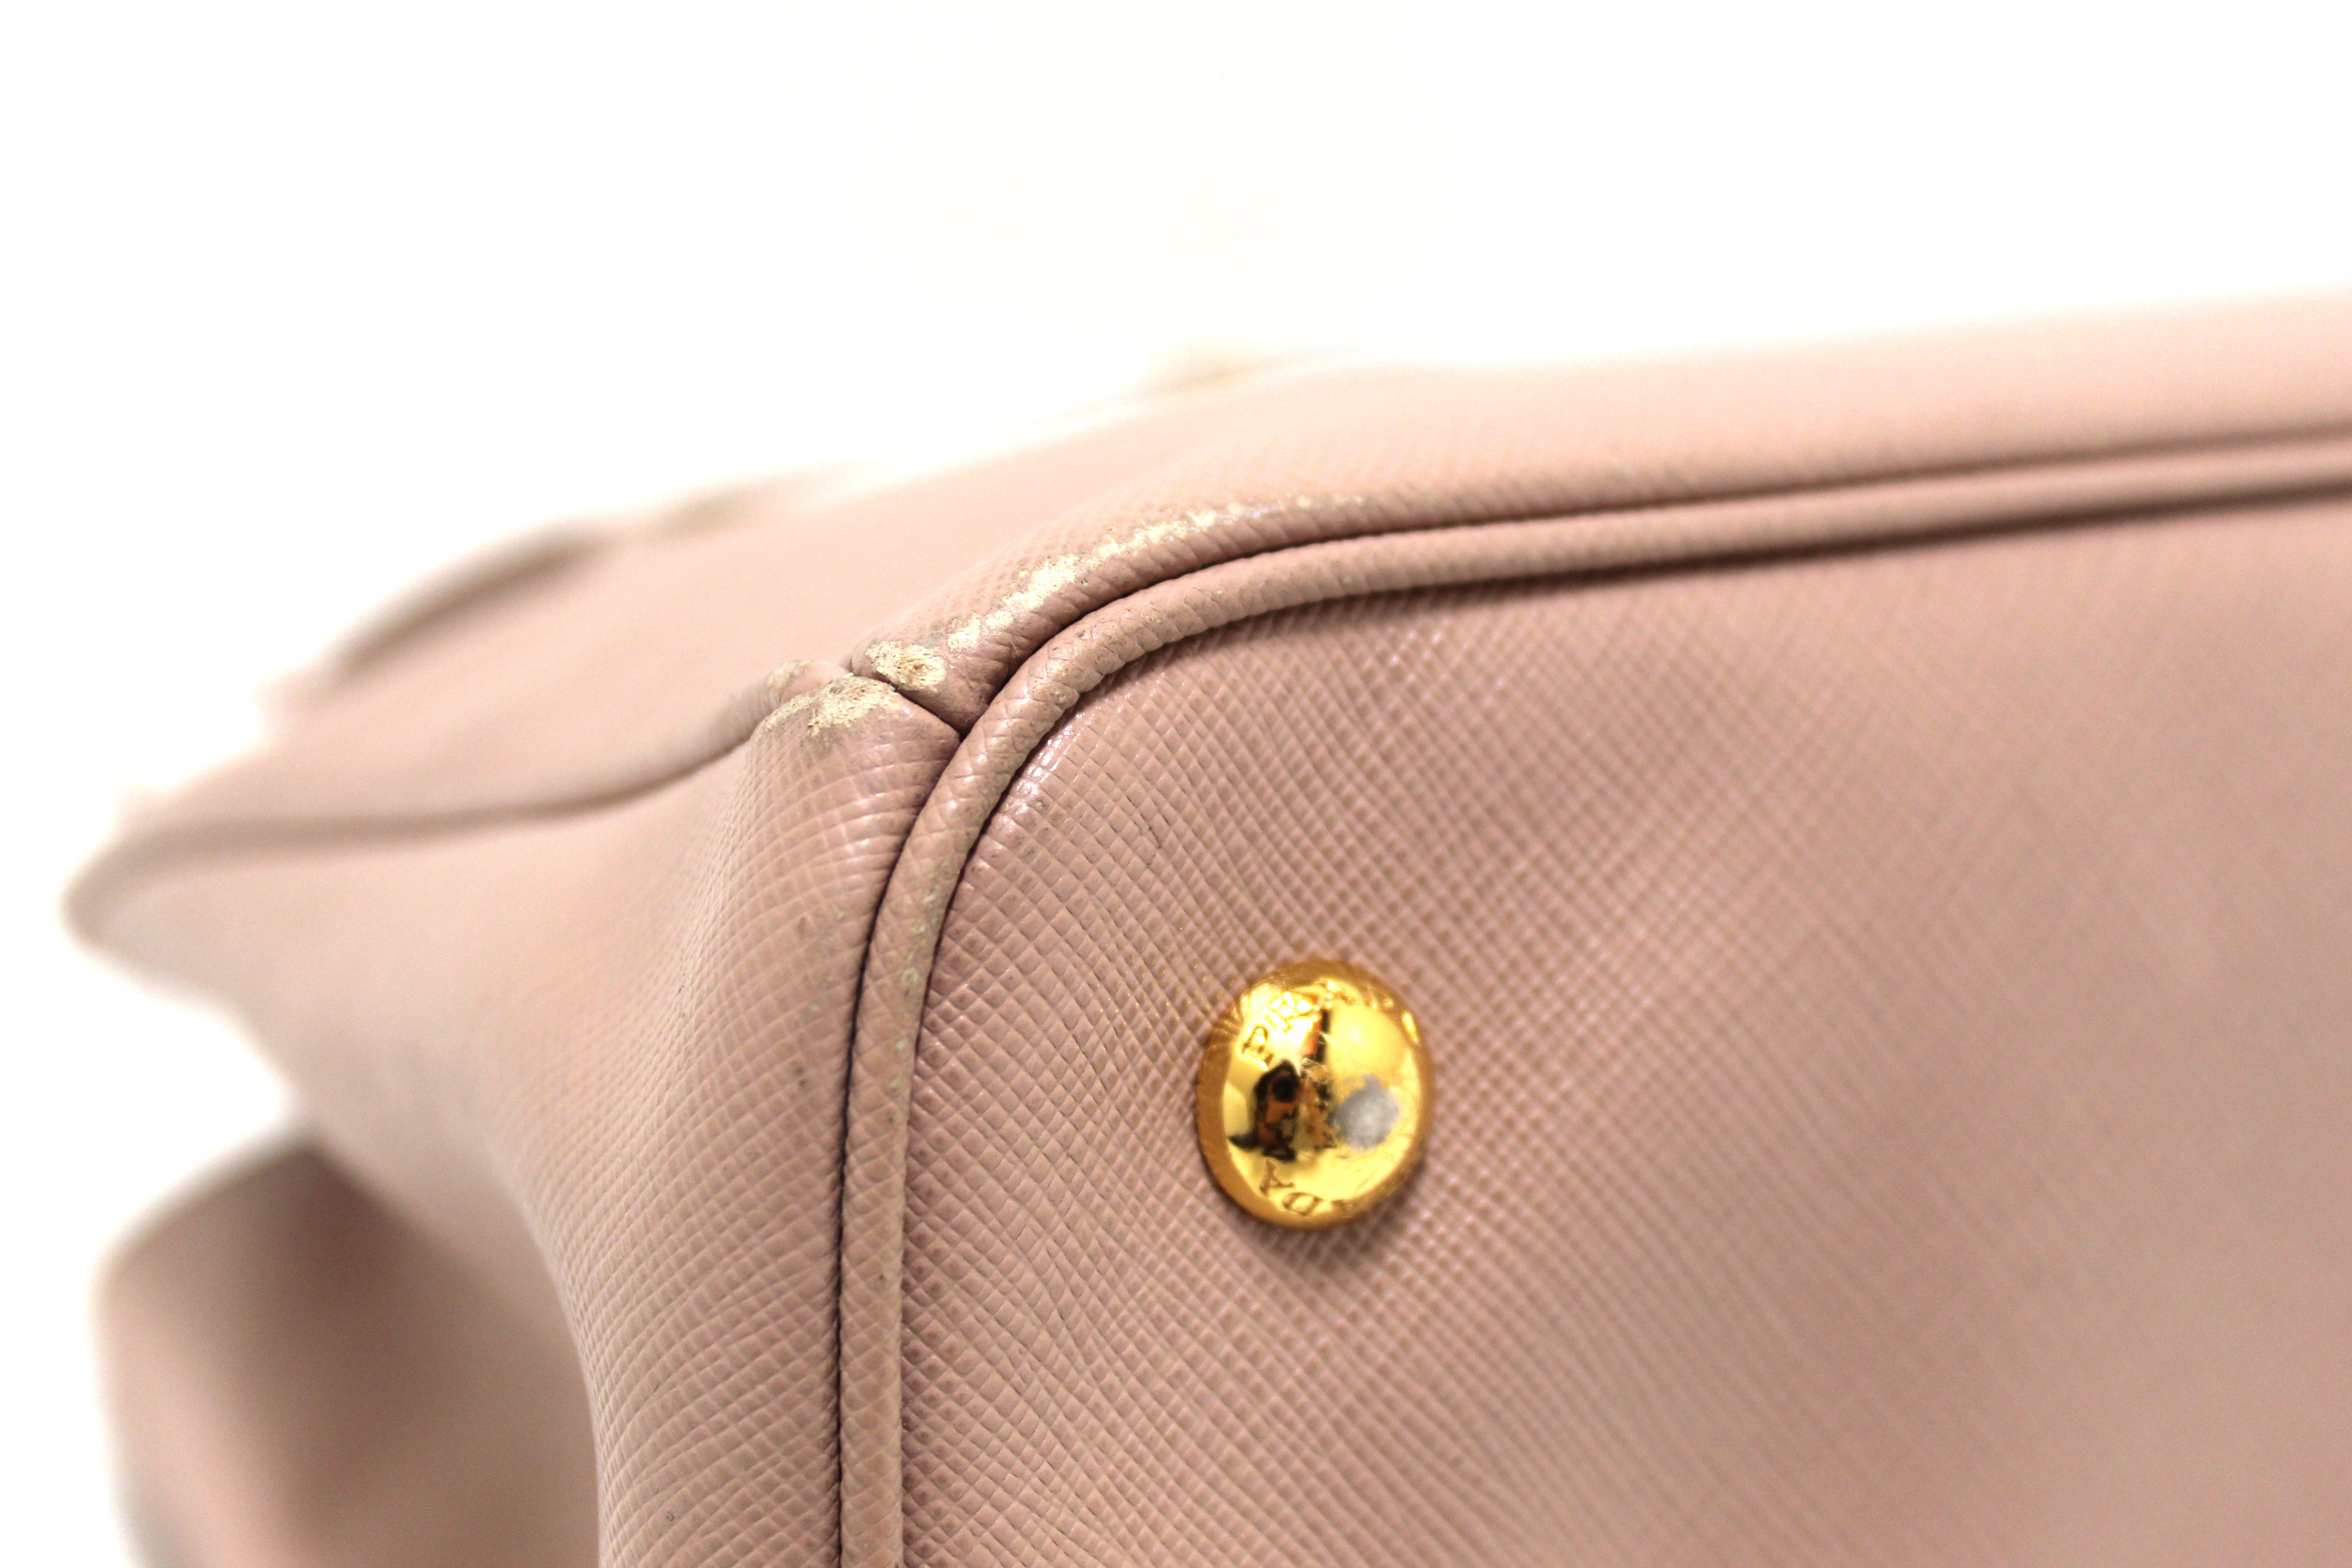 PRADA Saffiano Galleria handbag pink series, Luxury, Bags